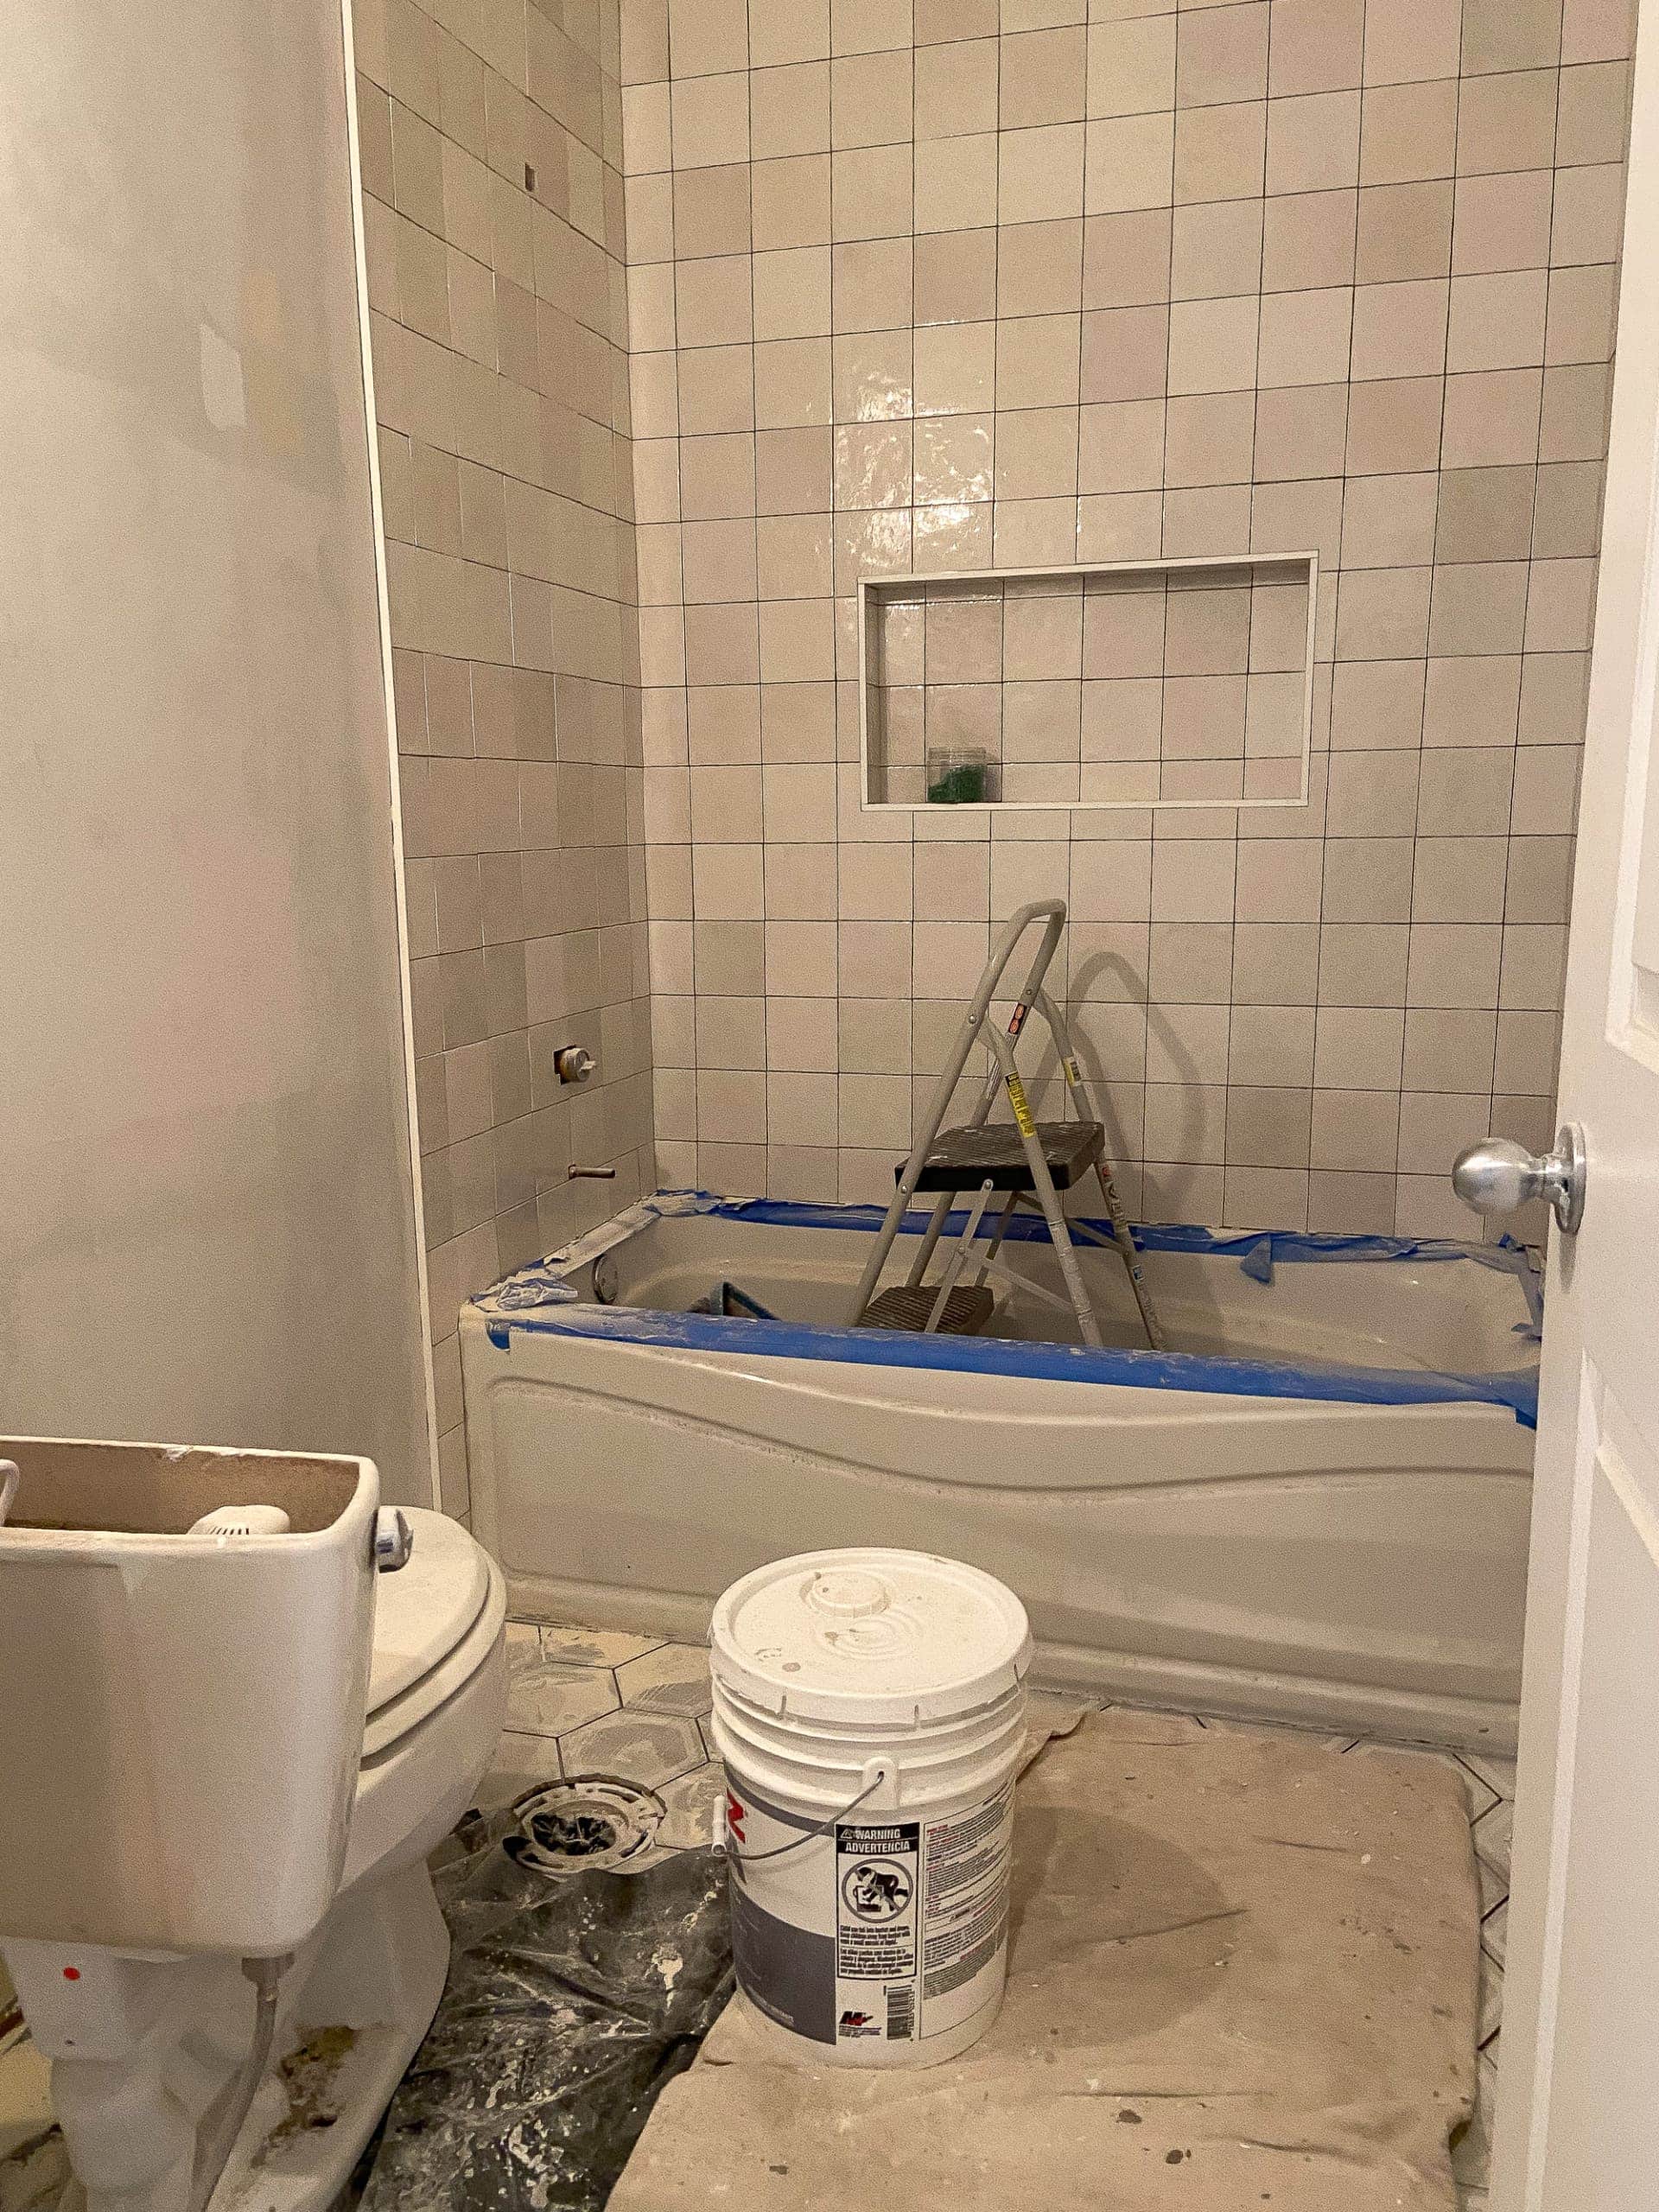 Bathroom renovation lessons